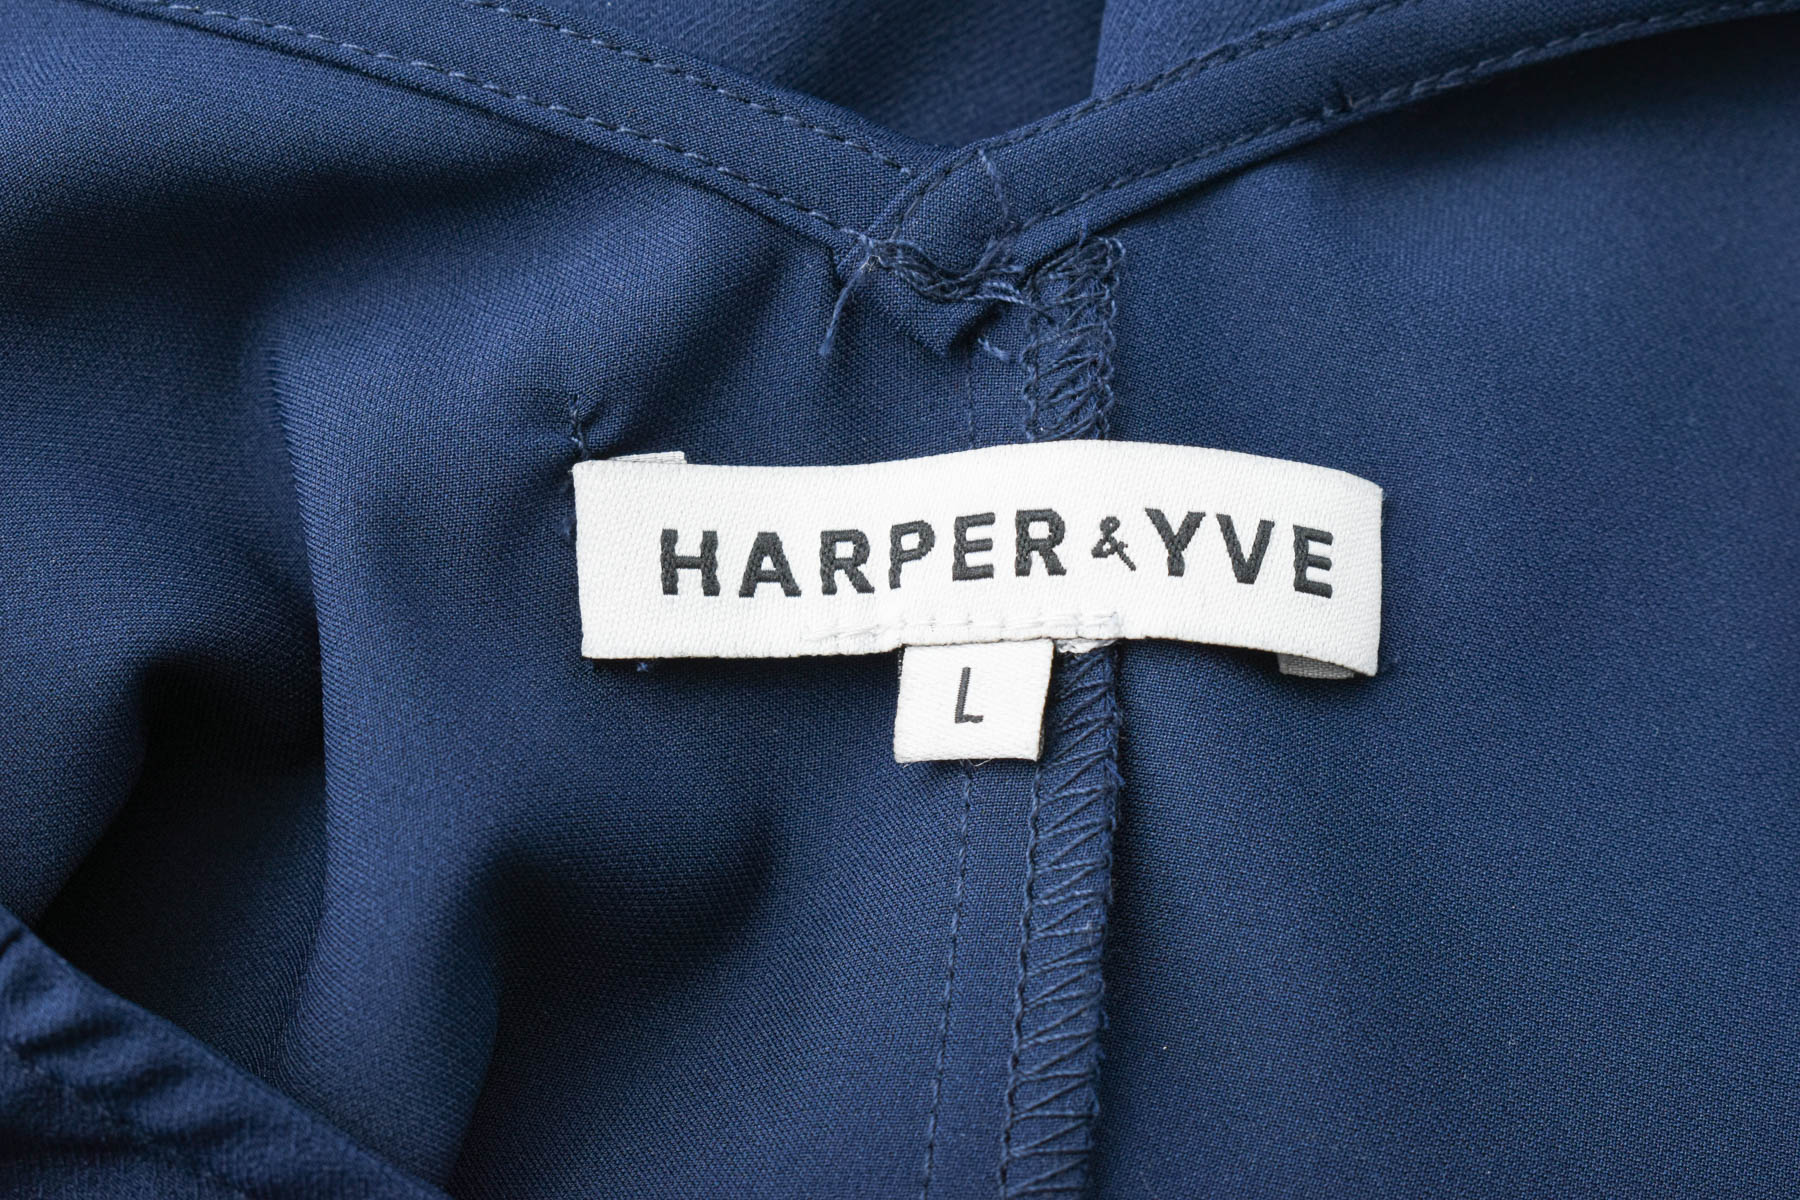 Dress - Harper & Yve - 2